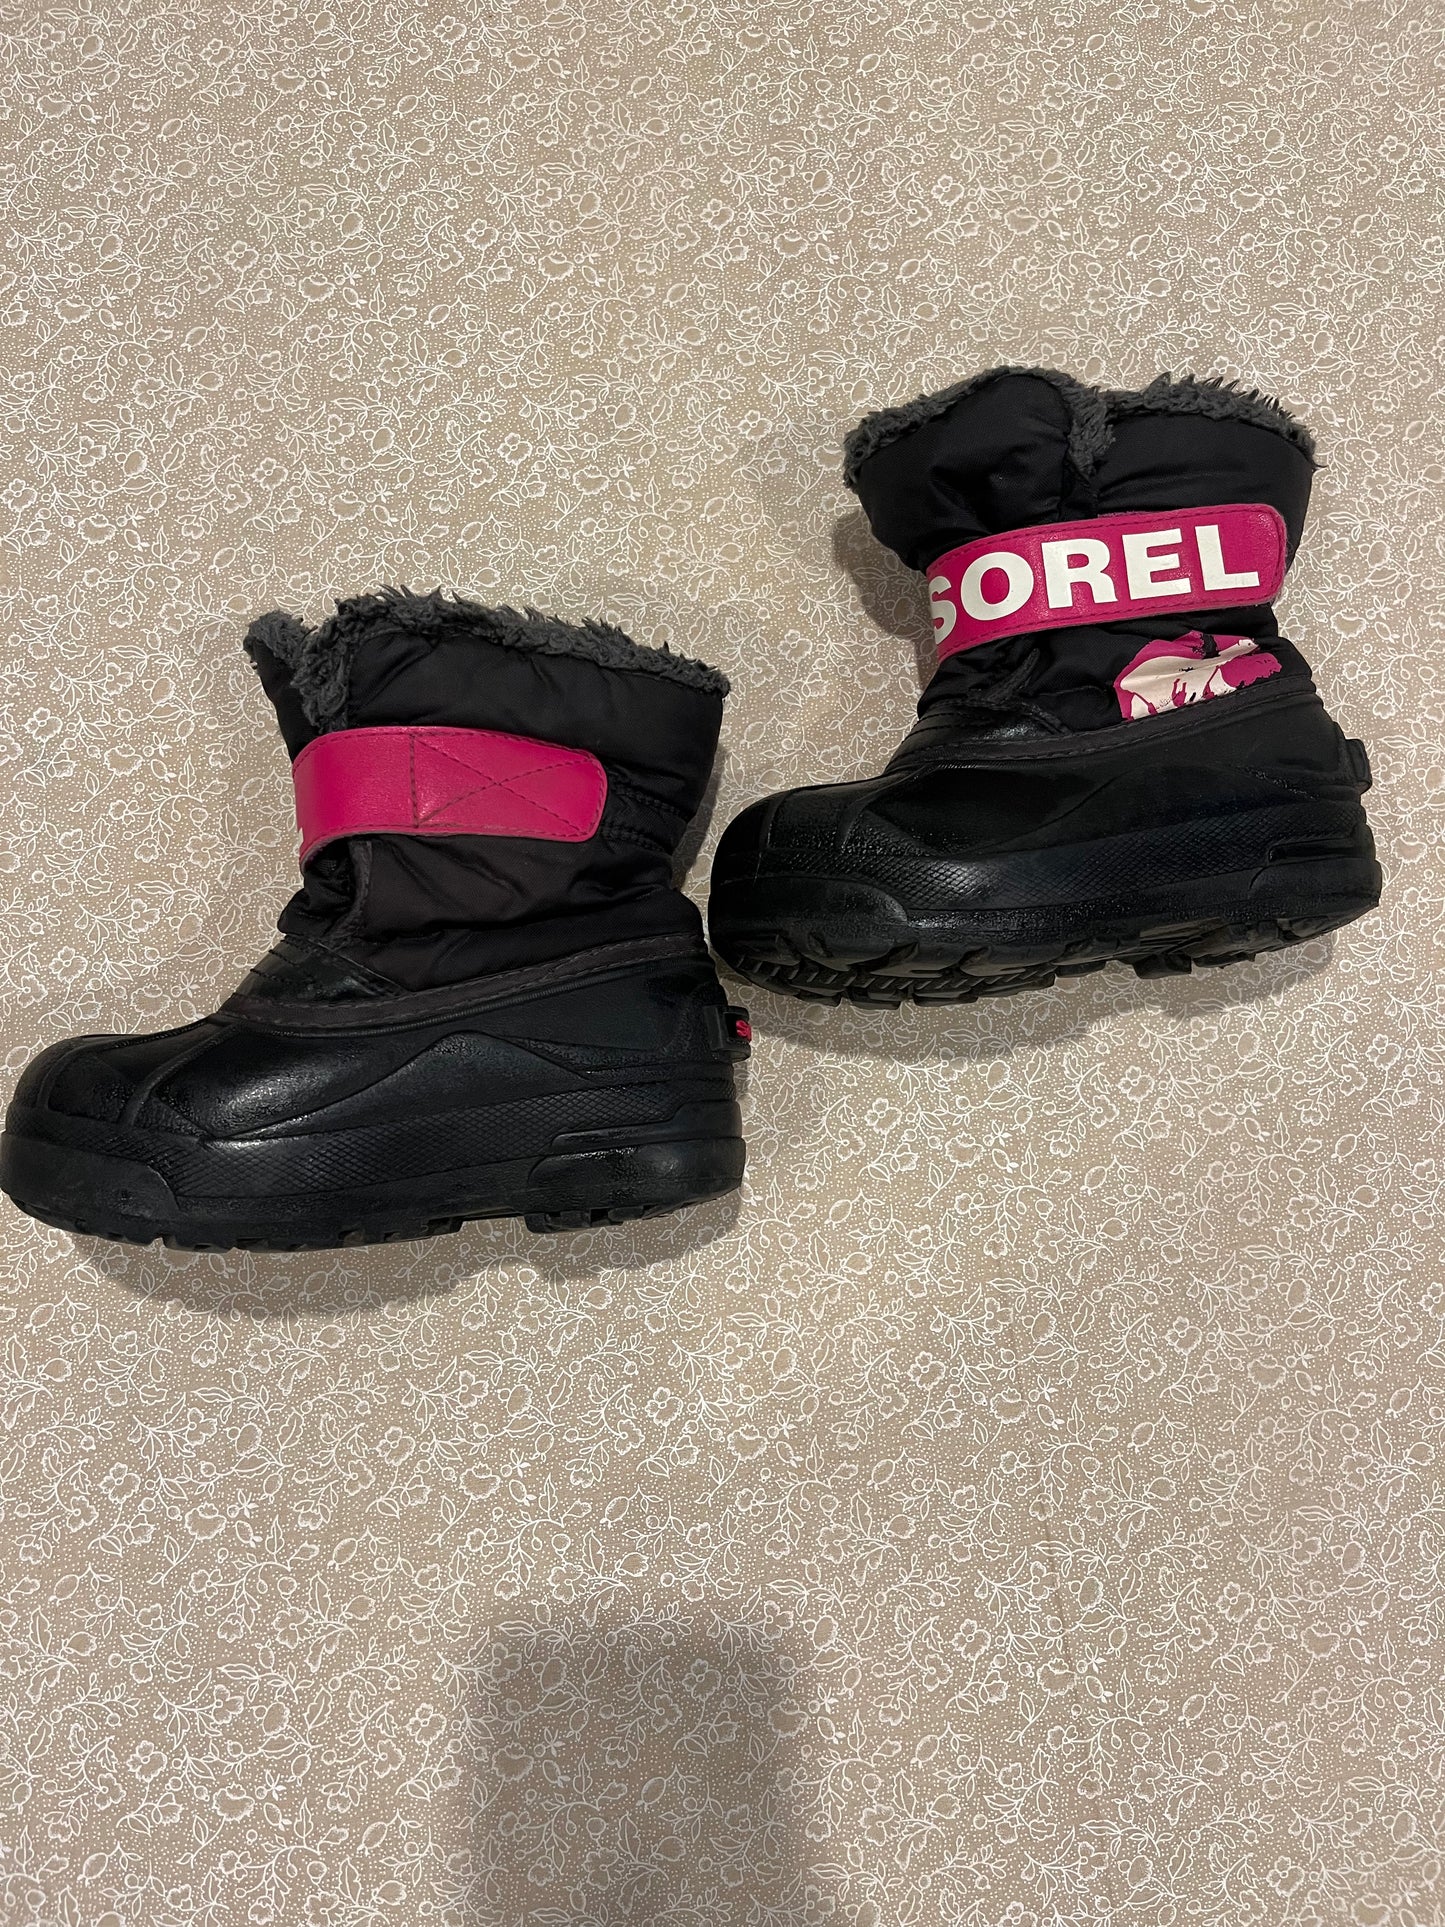 11C-footwear-sorel-pink-black-boots